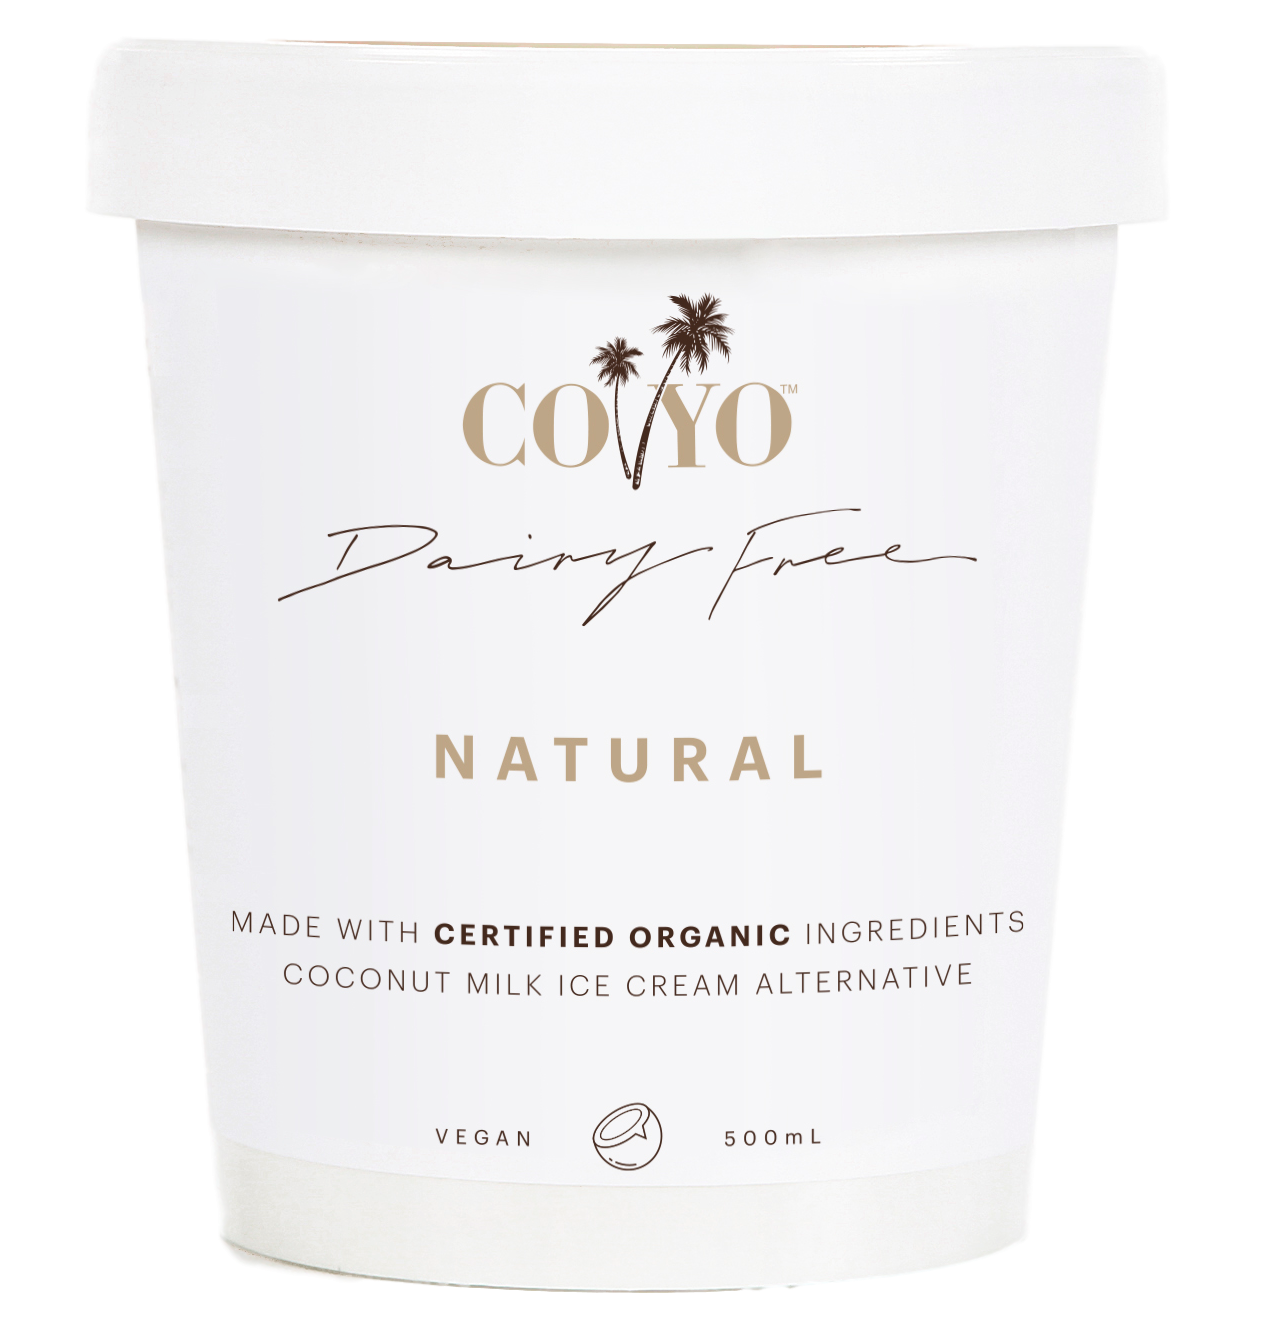 coyo natural ice cream